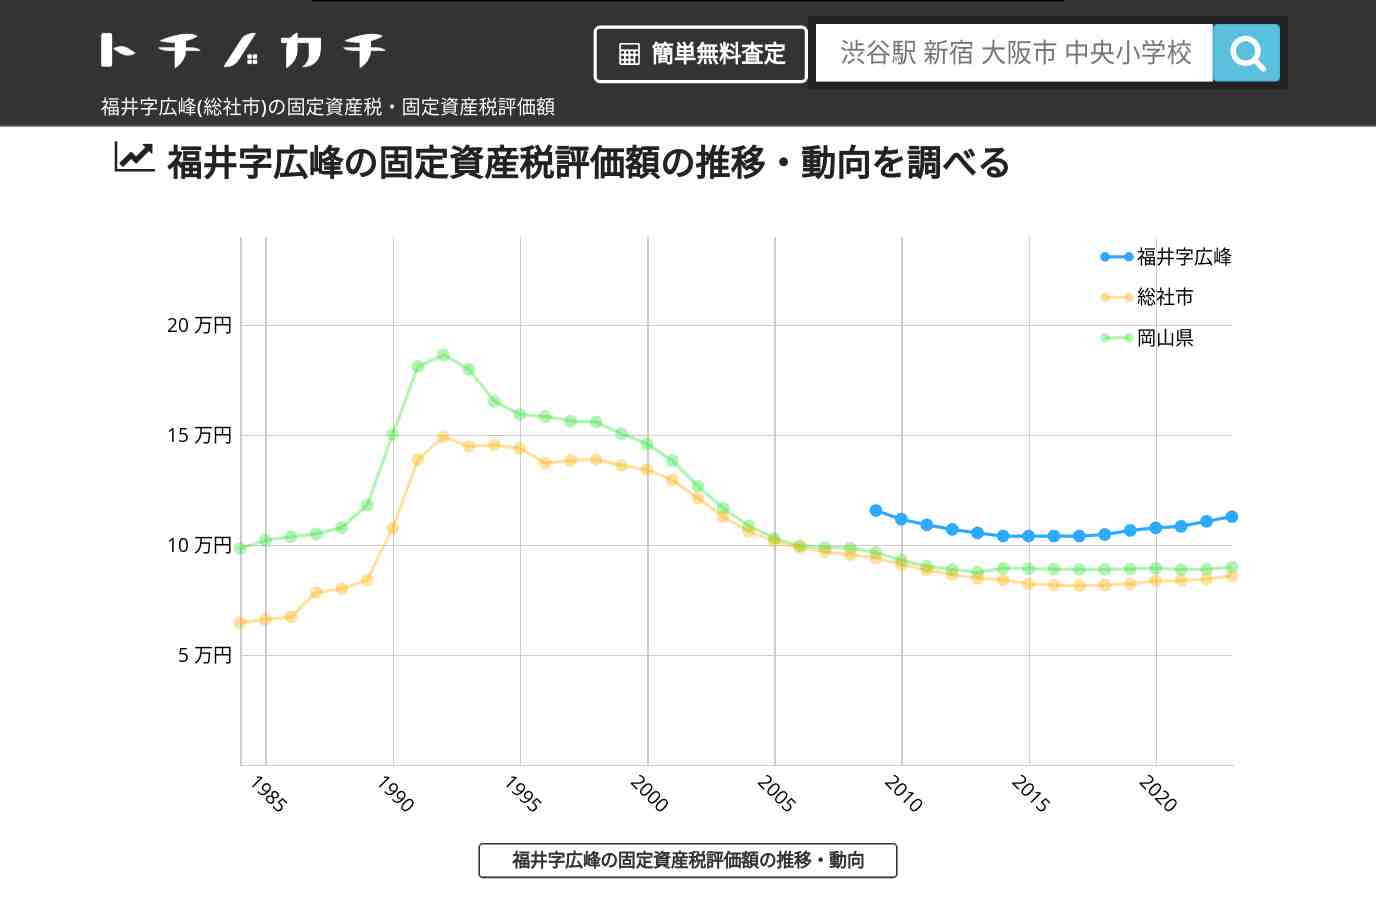 福井字広峰(総社市)の固定資産税・固定資産税評価額 | トチノカチ